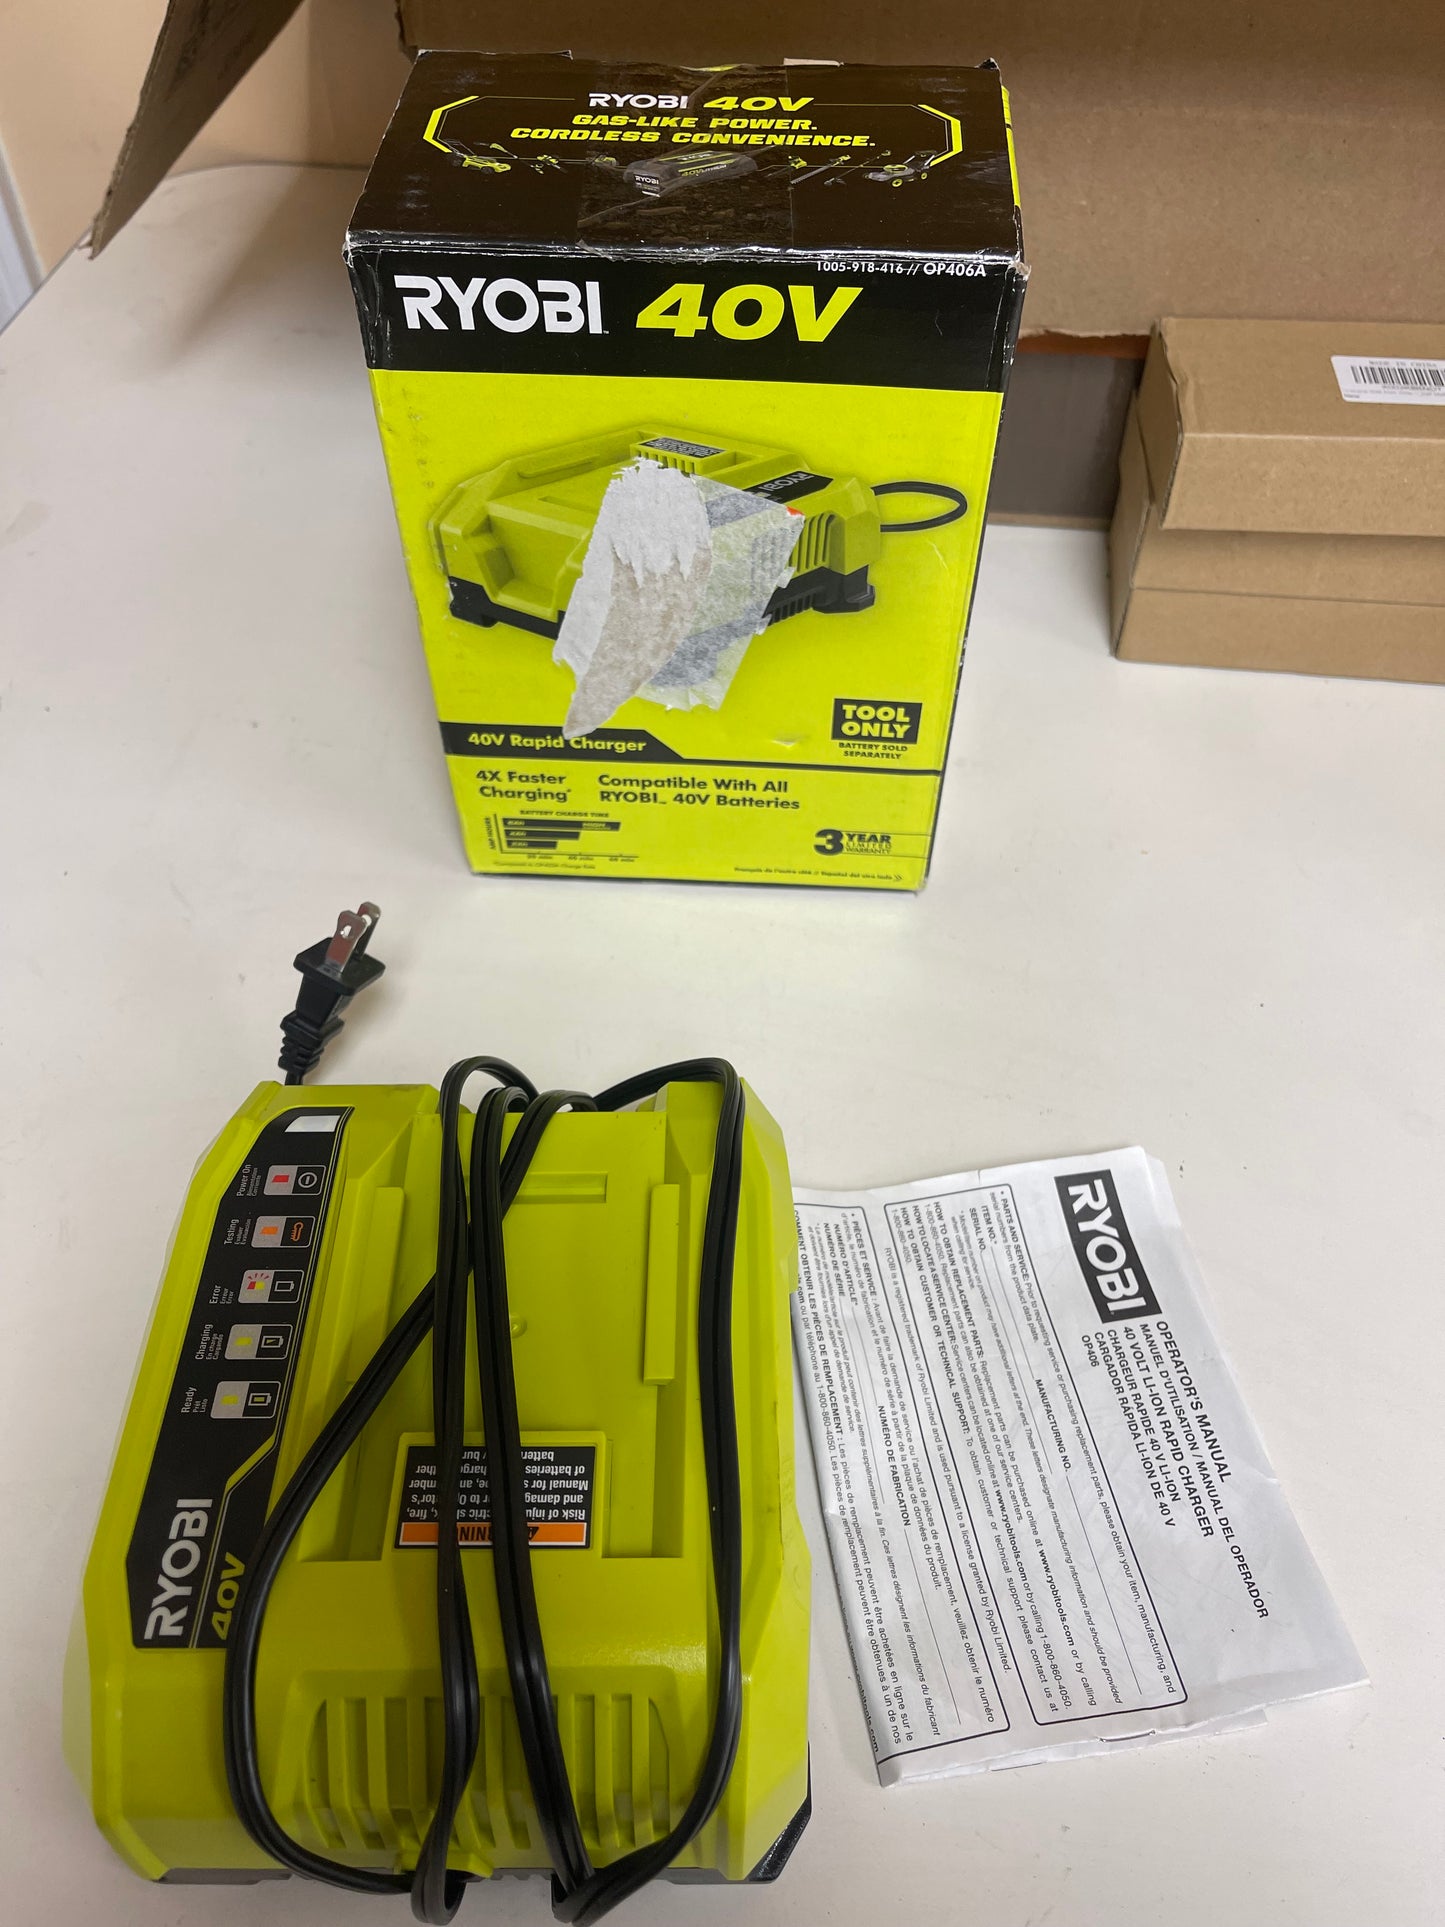 Ryobi 40V Lithium Ion Rapid Charger Damaged Box